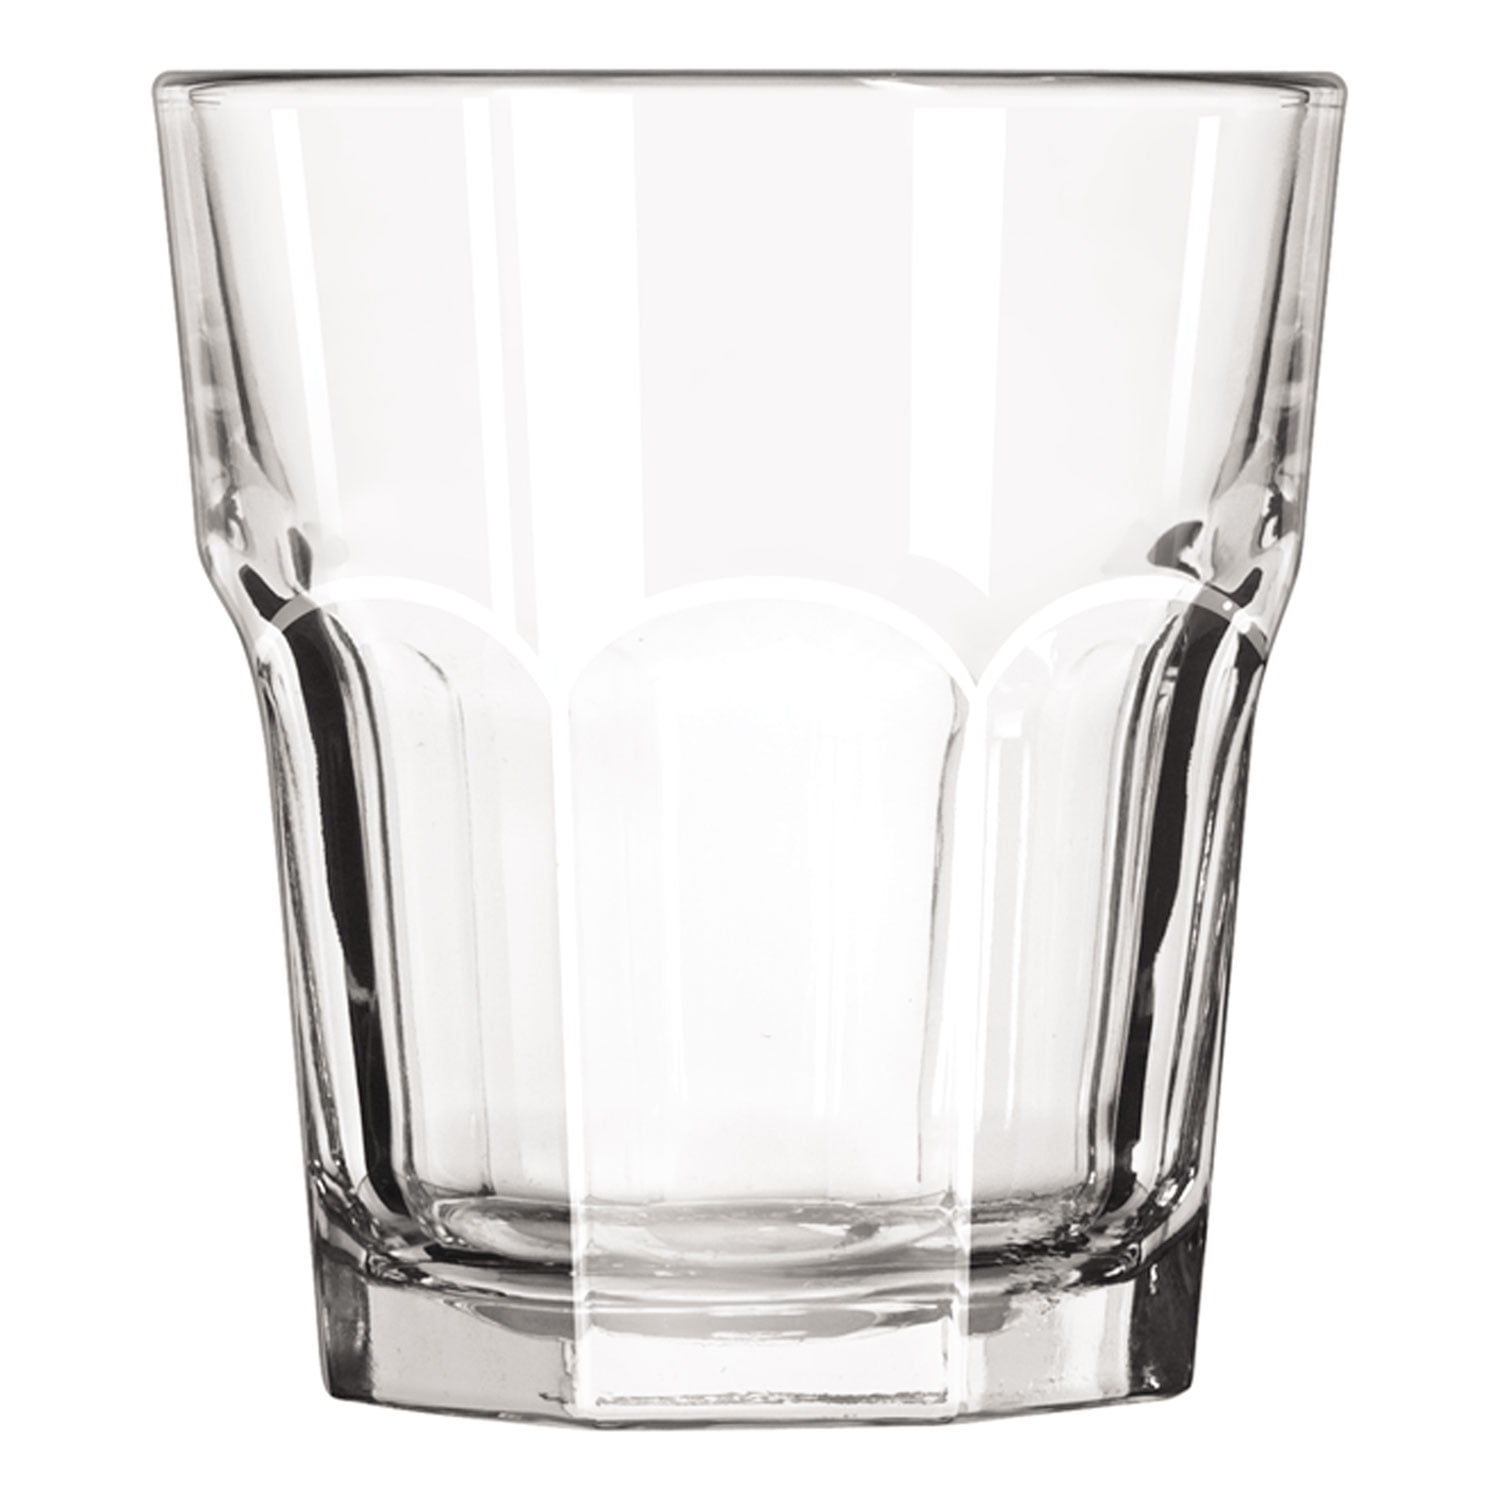 Libbey Glassware Winchester Glasses Assortment DuraTuff Mint Condition! 